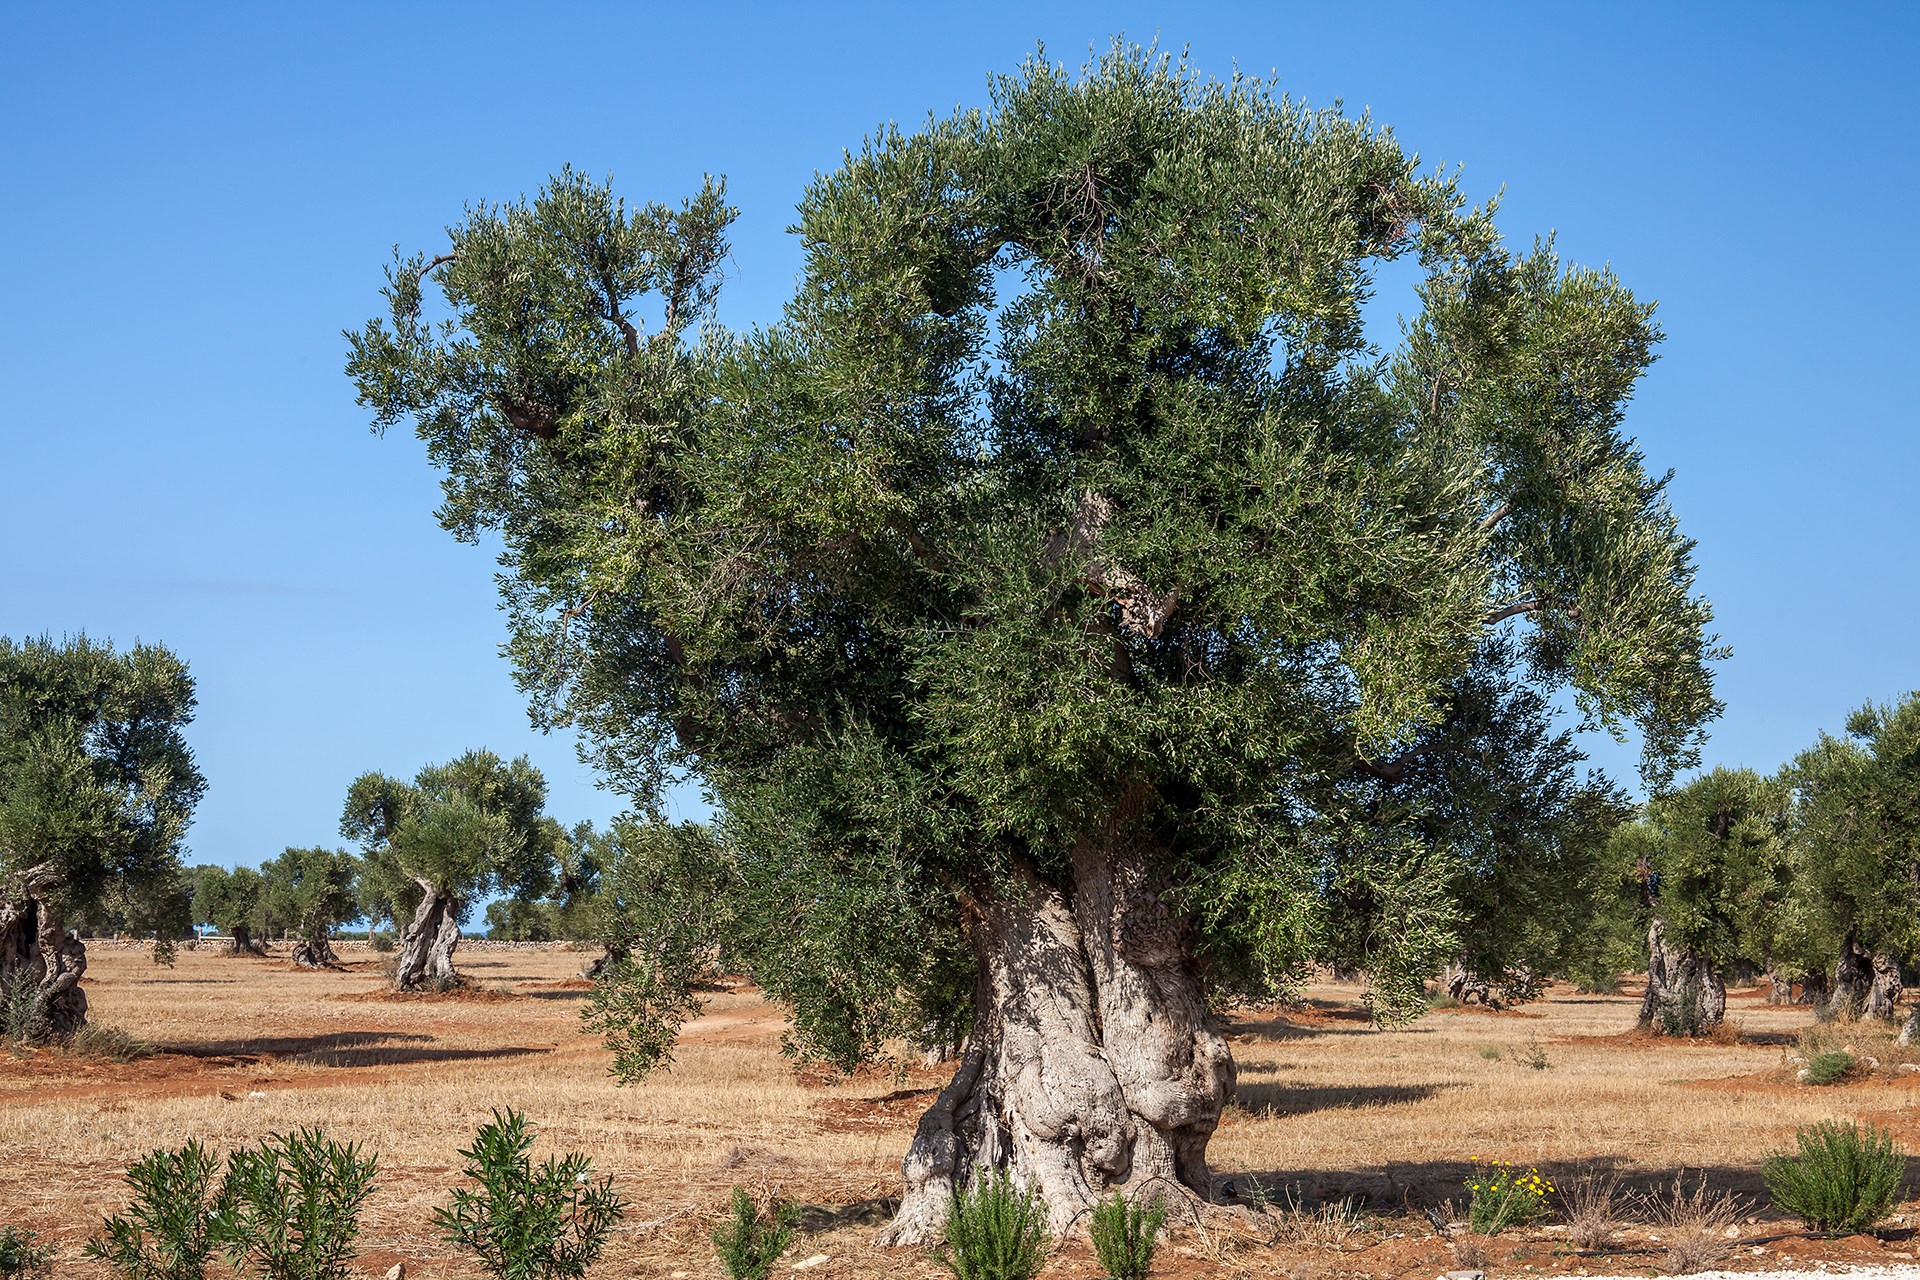 Underground olive oil presses in Puglia